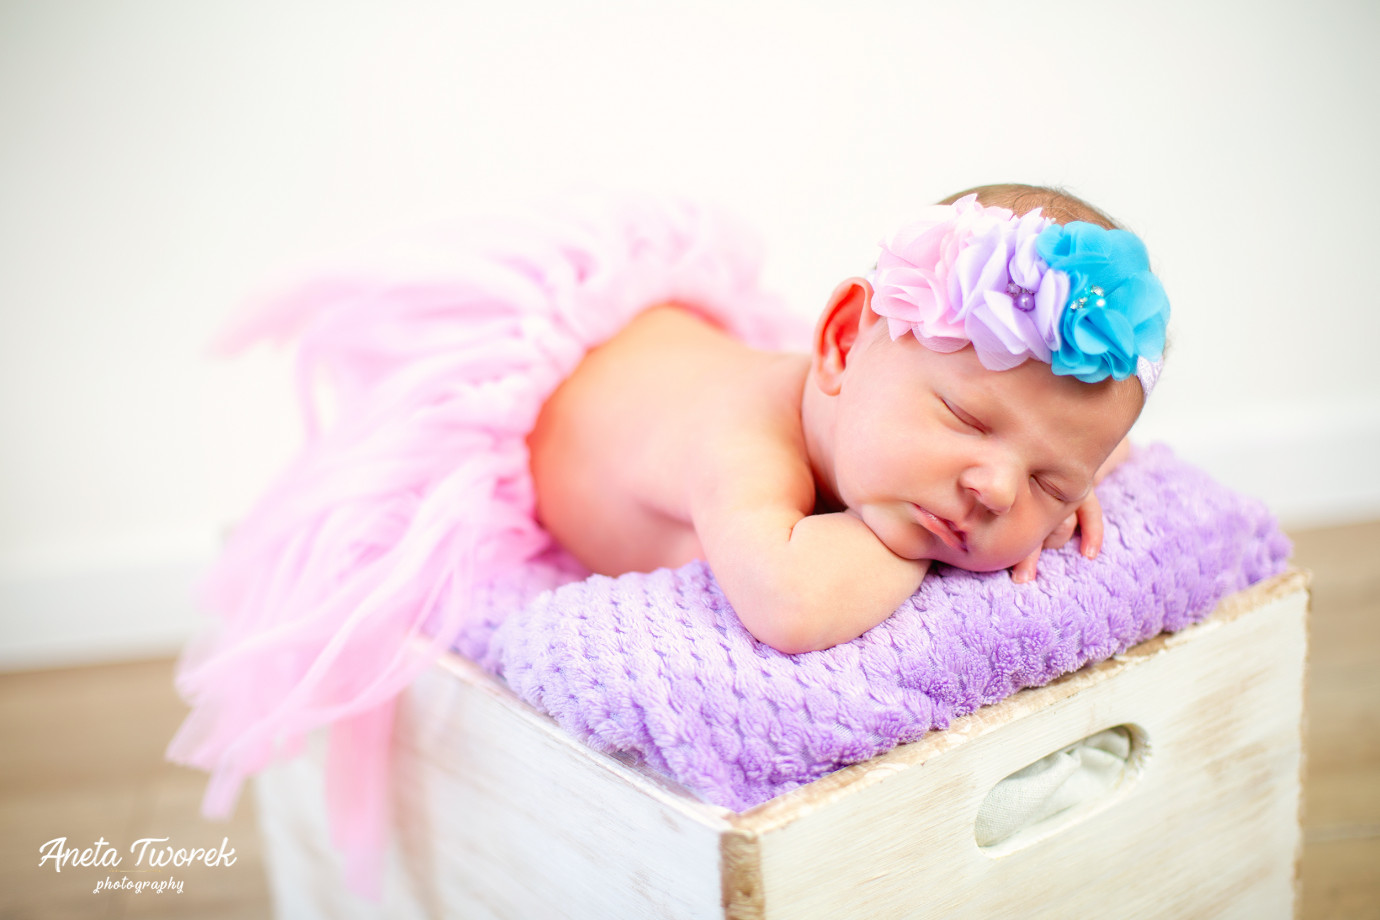 fotograf torun aneta-tworek portfolio zdjecia noworodkow sesje noworodkowe niemowlę